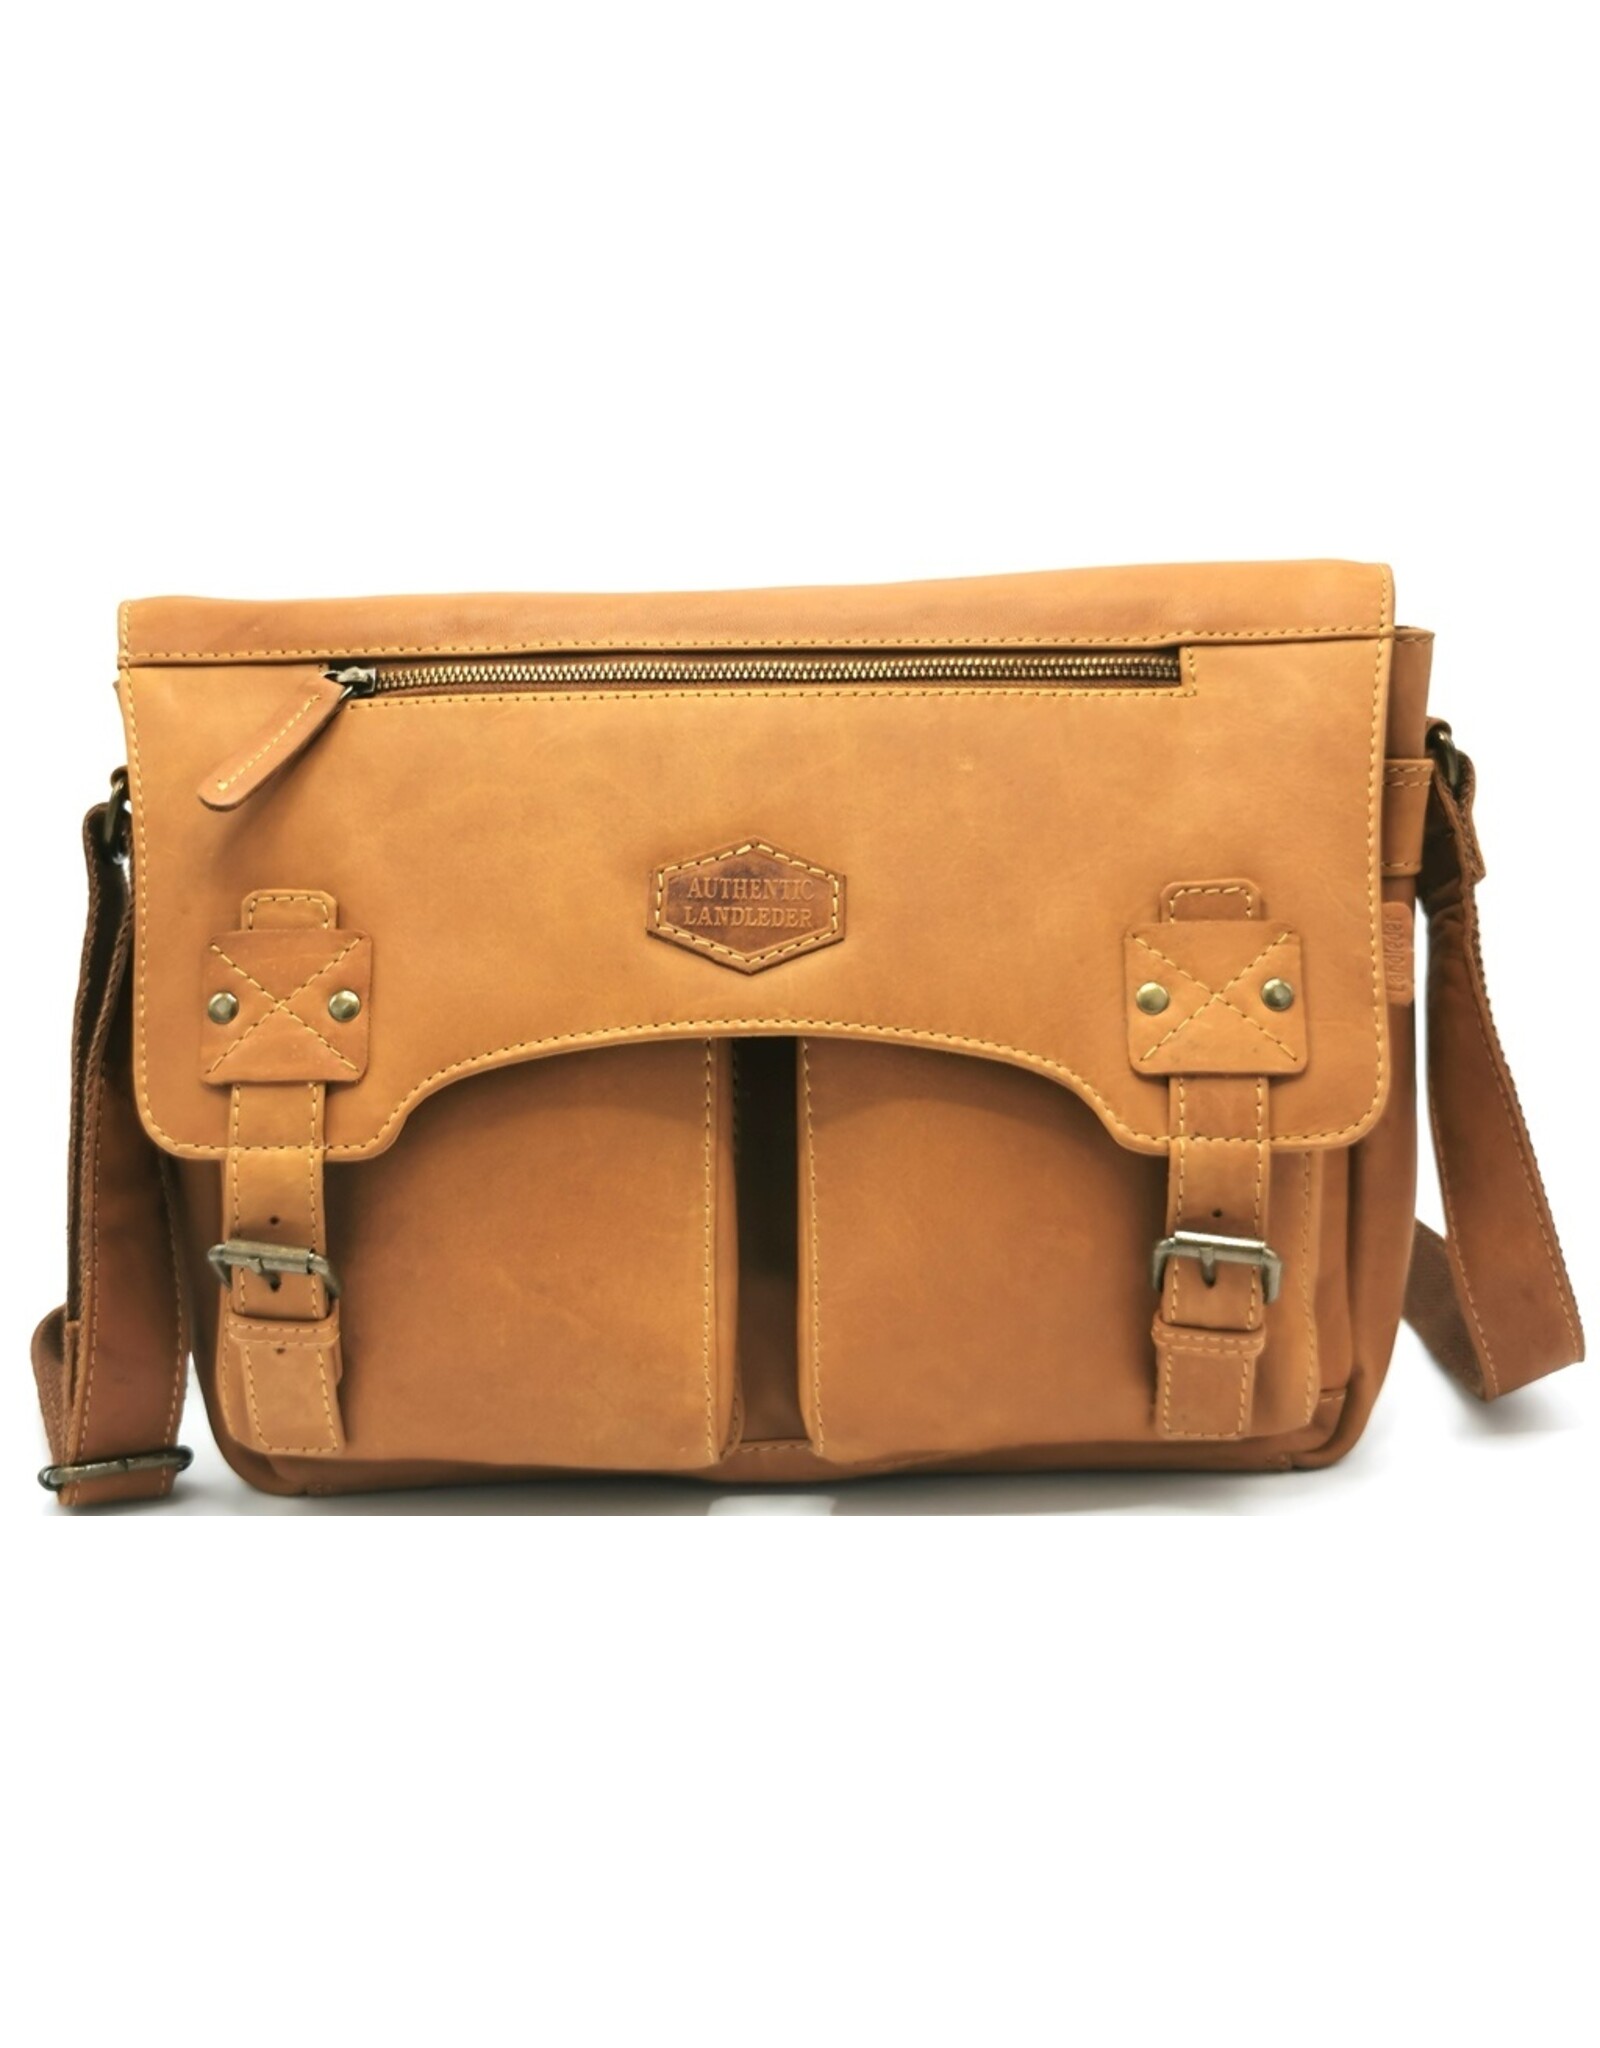 LandLeder Leather bags - Leather Messenger bag  PINCH OF WAX 35cm